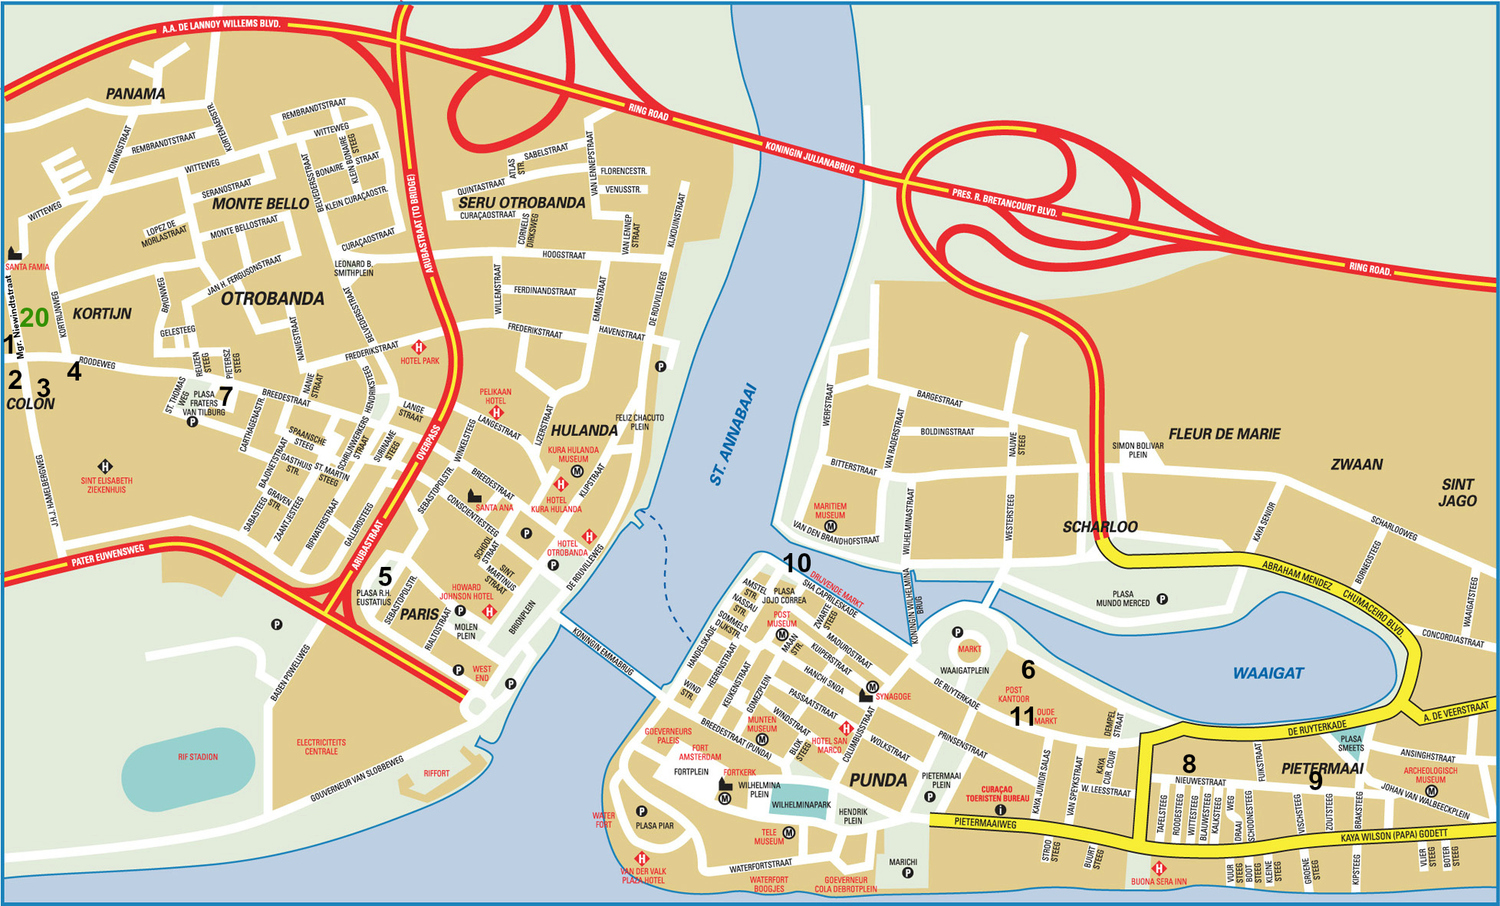 Map+of+Central+Willemstad+Curacao+w+Otrobanda+Punda+Scharloo+and+Pietermaai